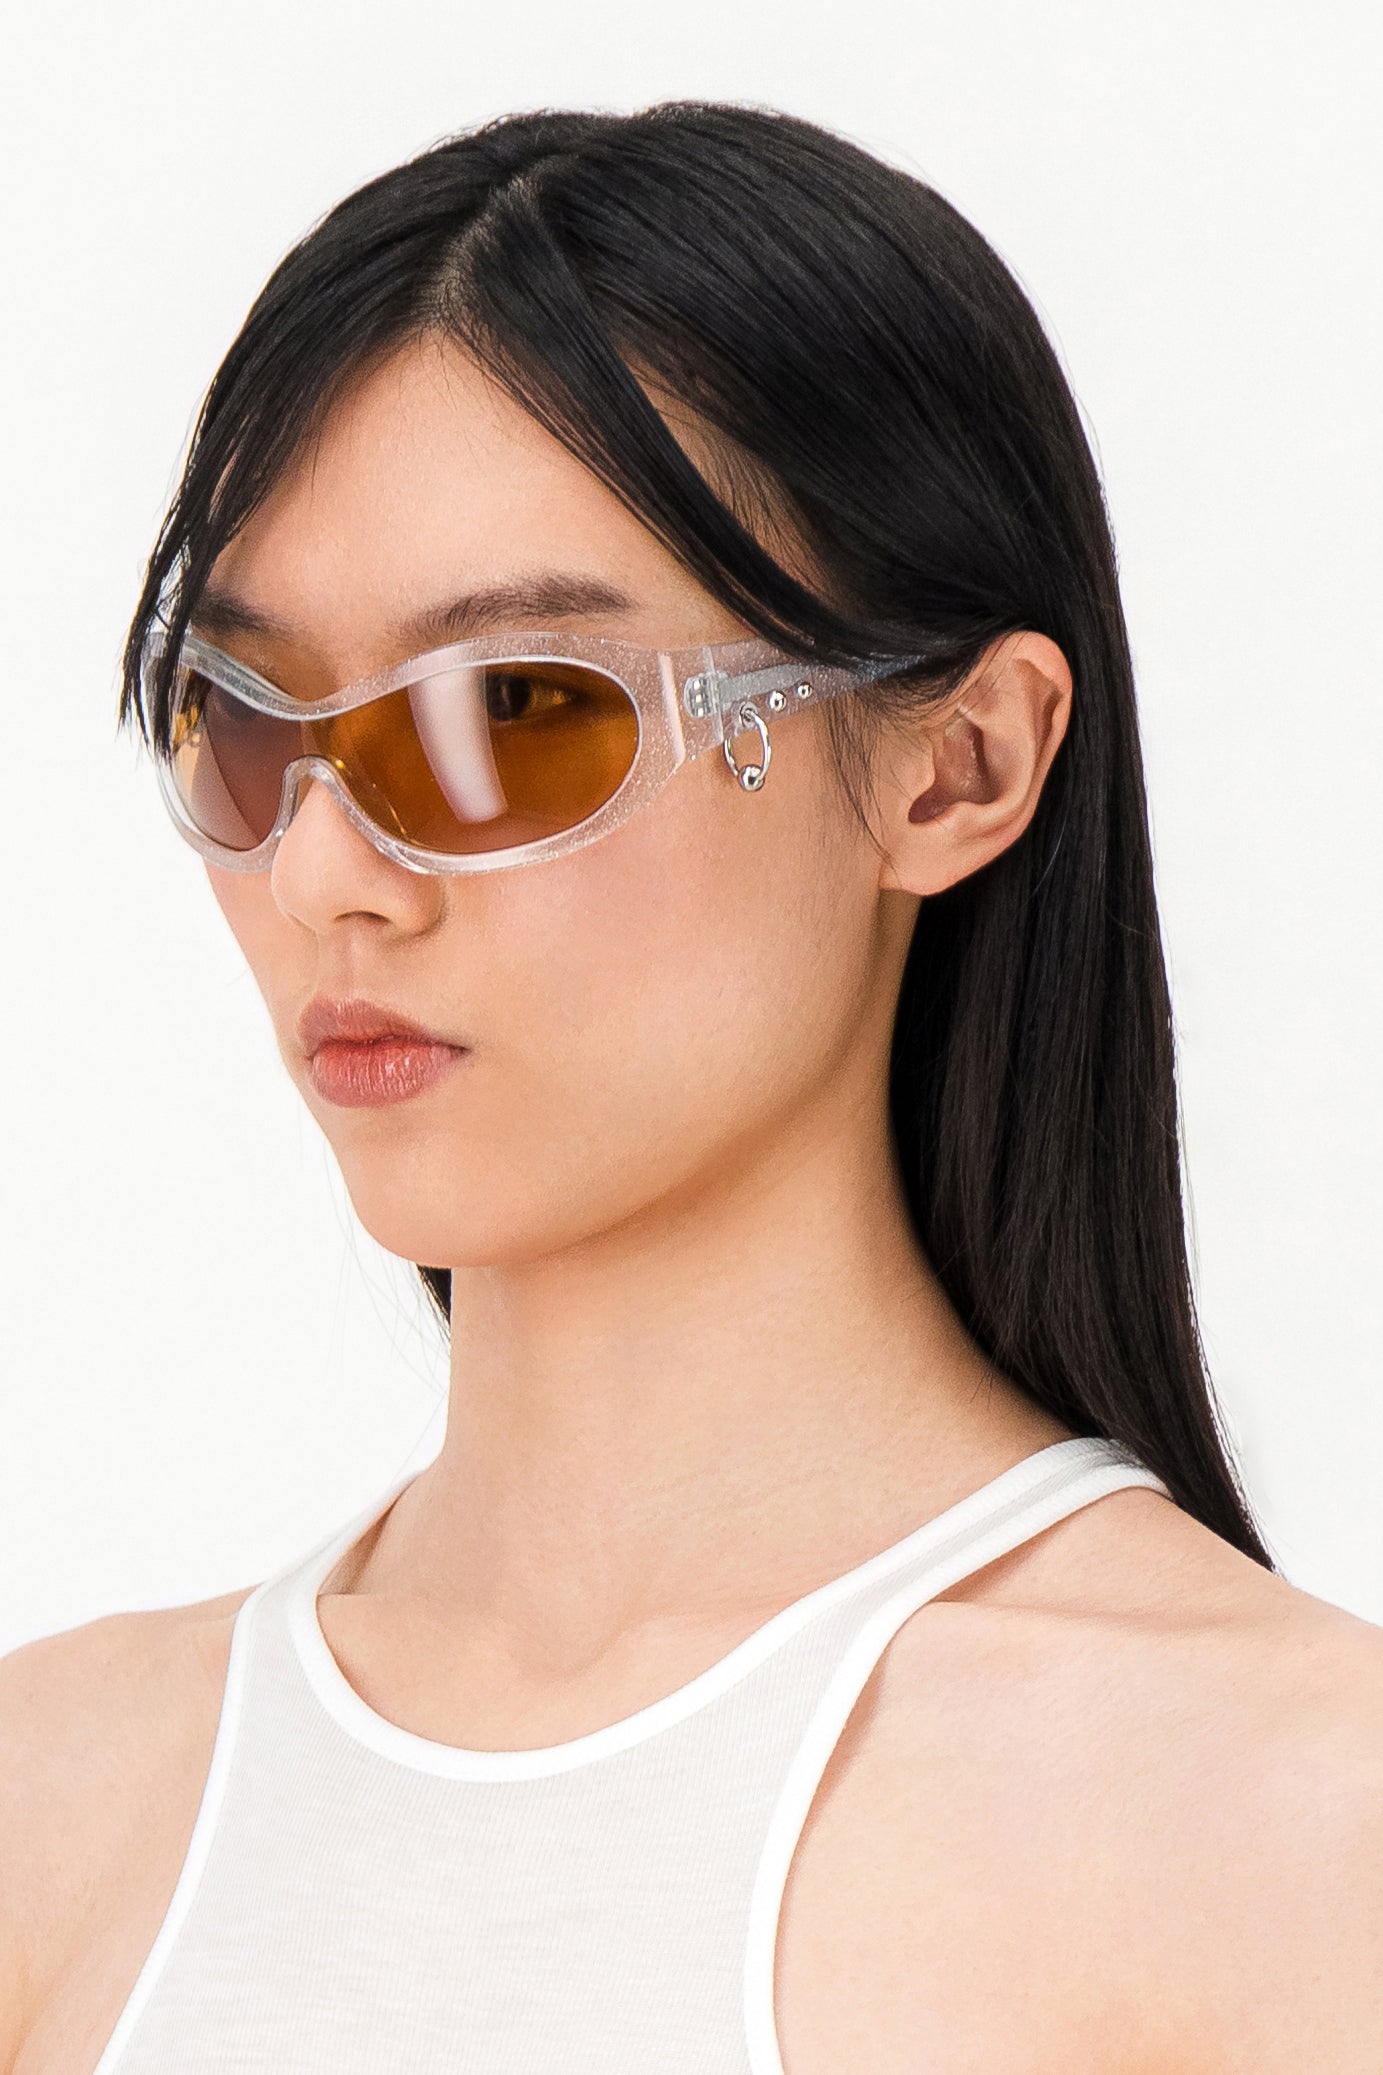 Jenny glitter sunglasses